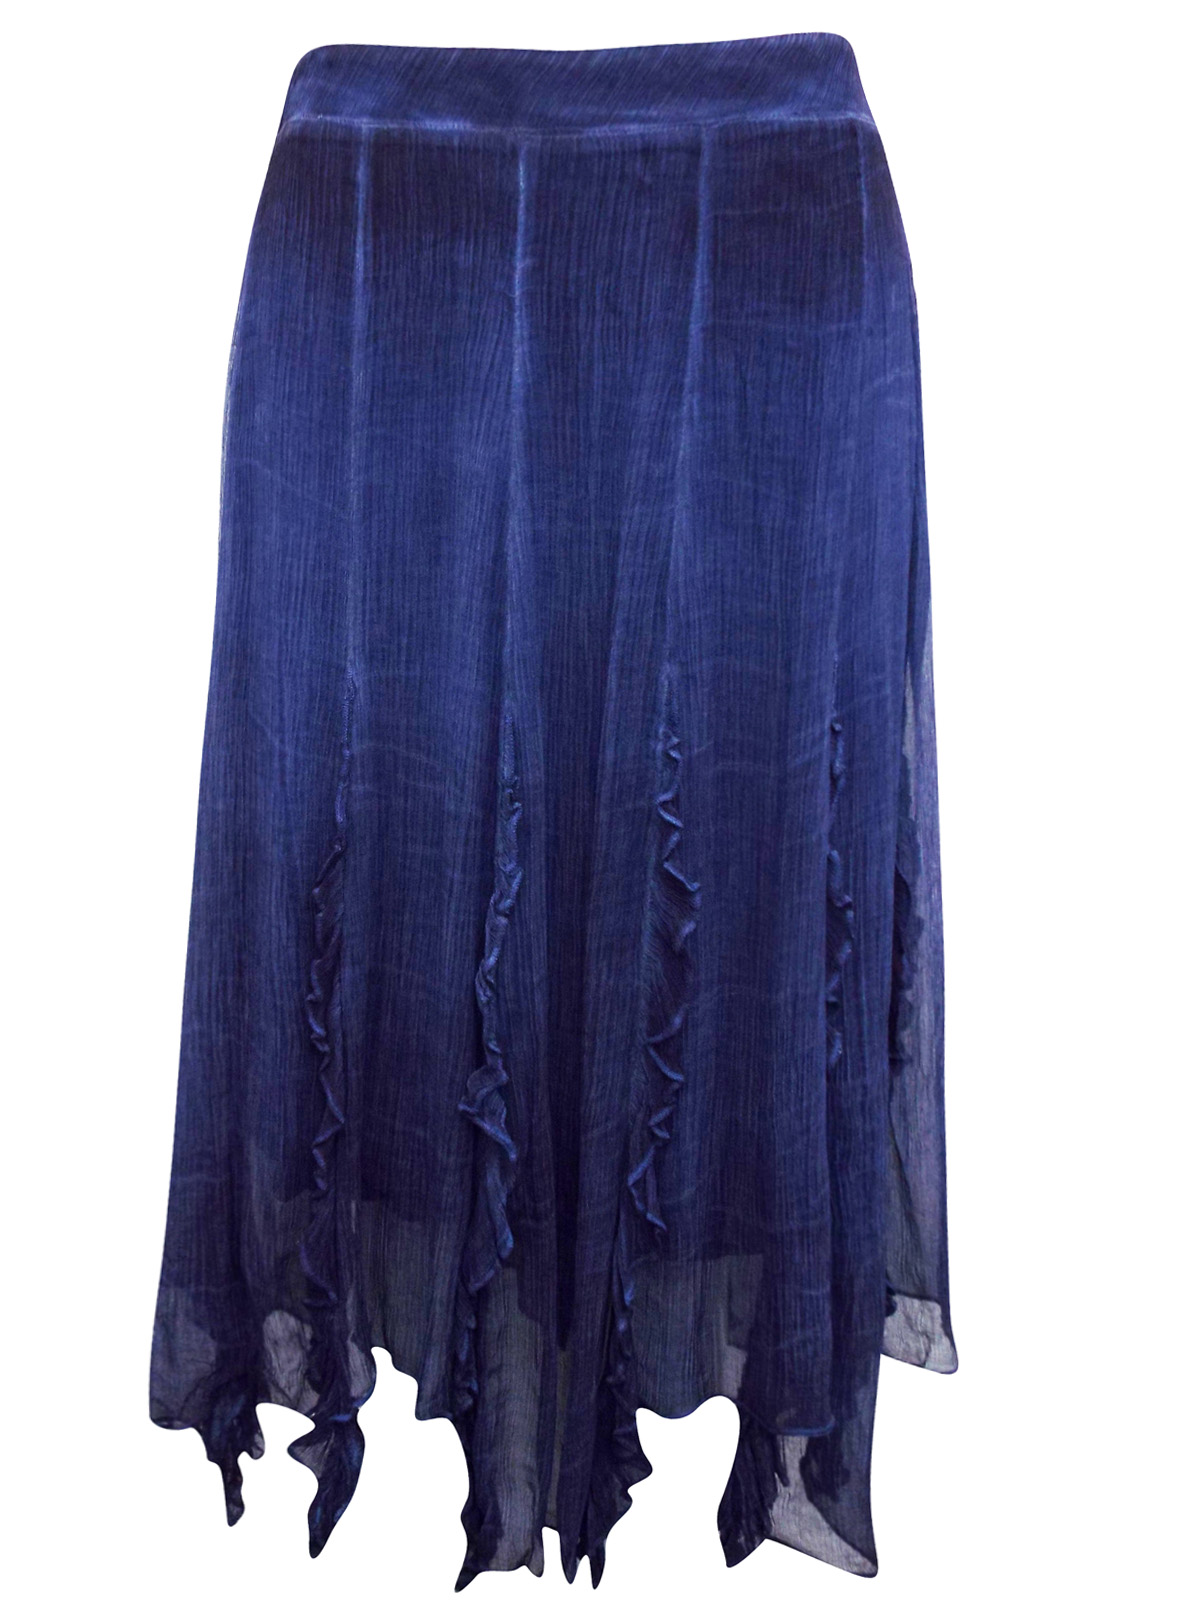 Soft Surroundings - - Soft Surroundings NAVY Ruffle Trimmed Panel Skirt ...